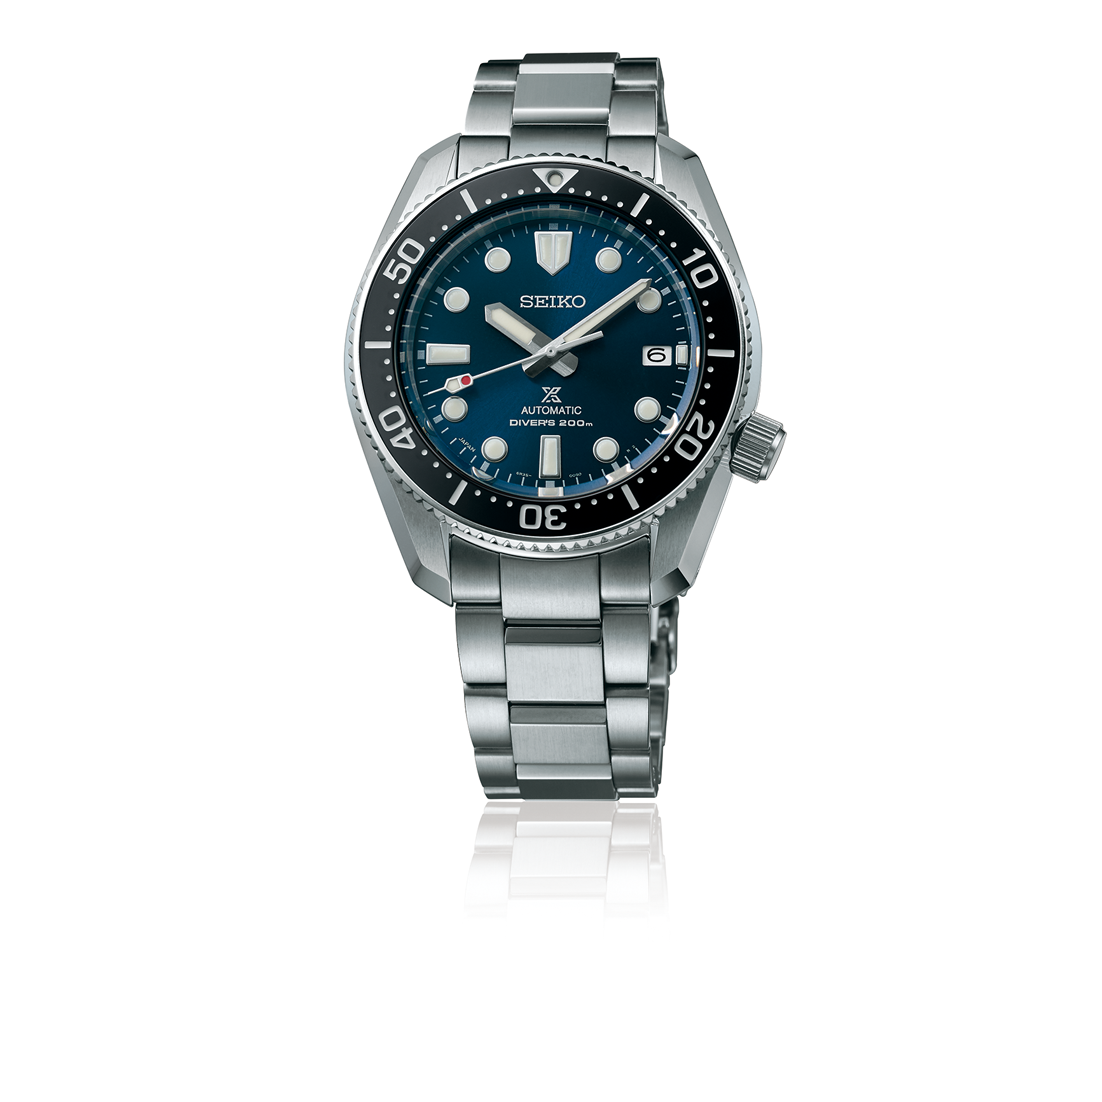 SEIKO PROSPEX SBDC127 ダイバーズ 200m防水 プロスペックス ラバーベルト付属 オートマチック 自動巻き 6R35-01E0  セイコー メンズ腕時計 - ブランド腕時計